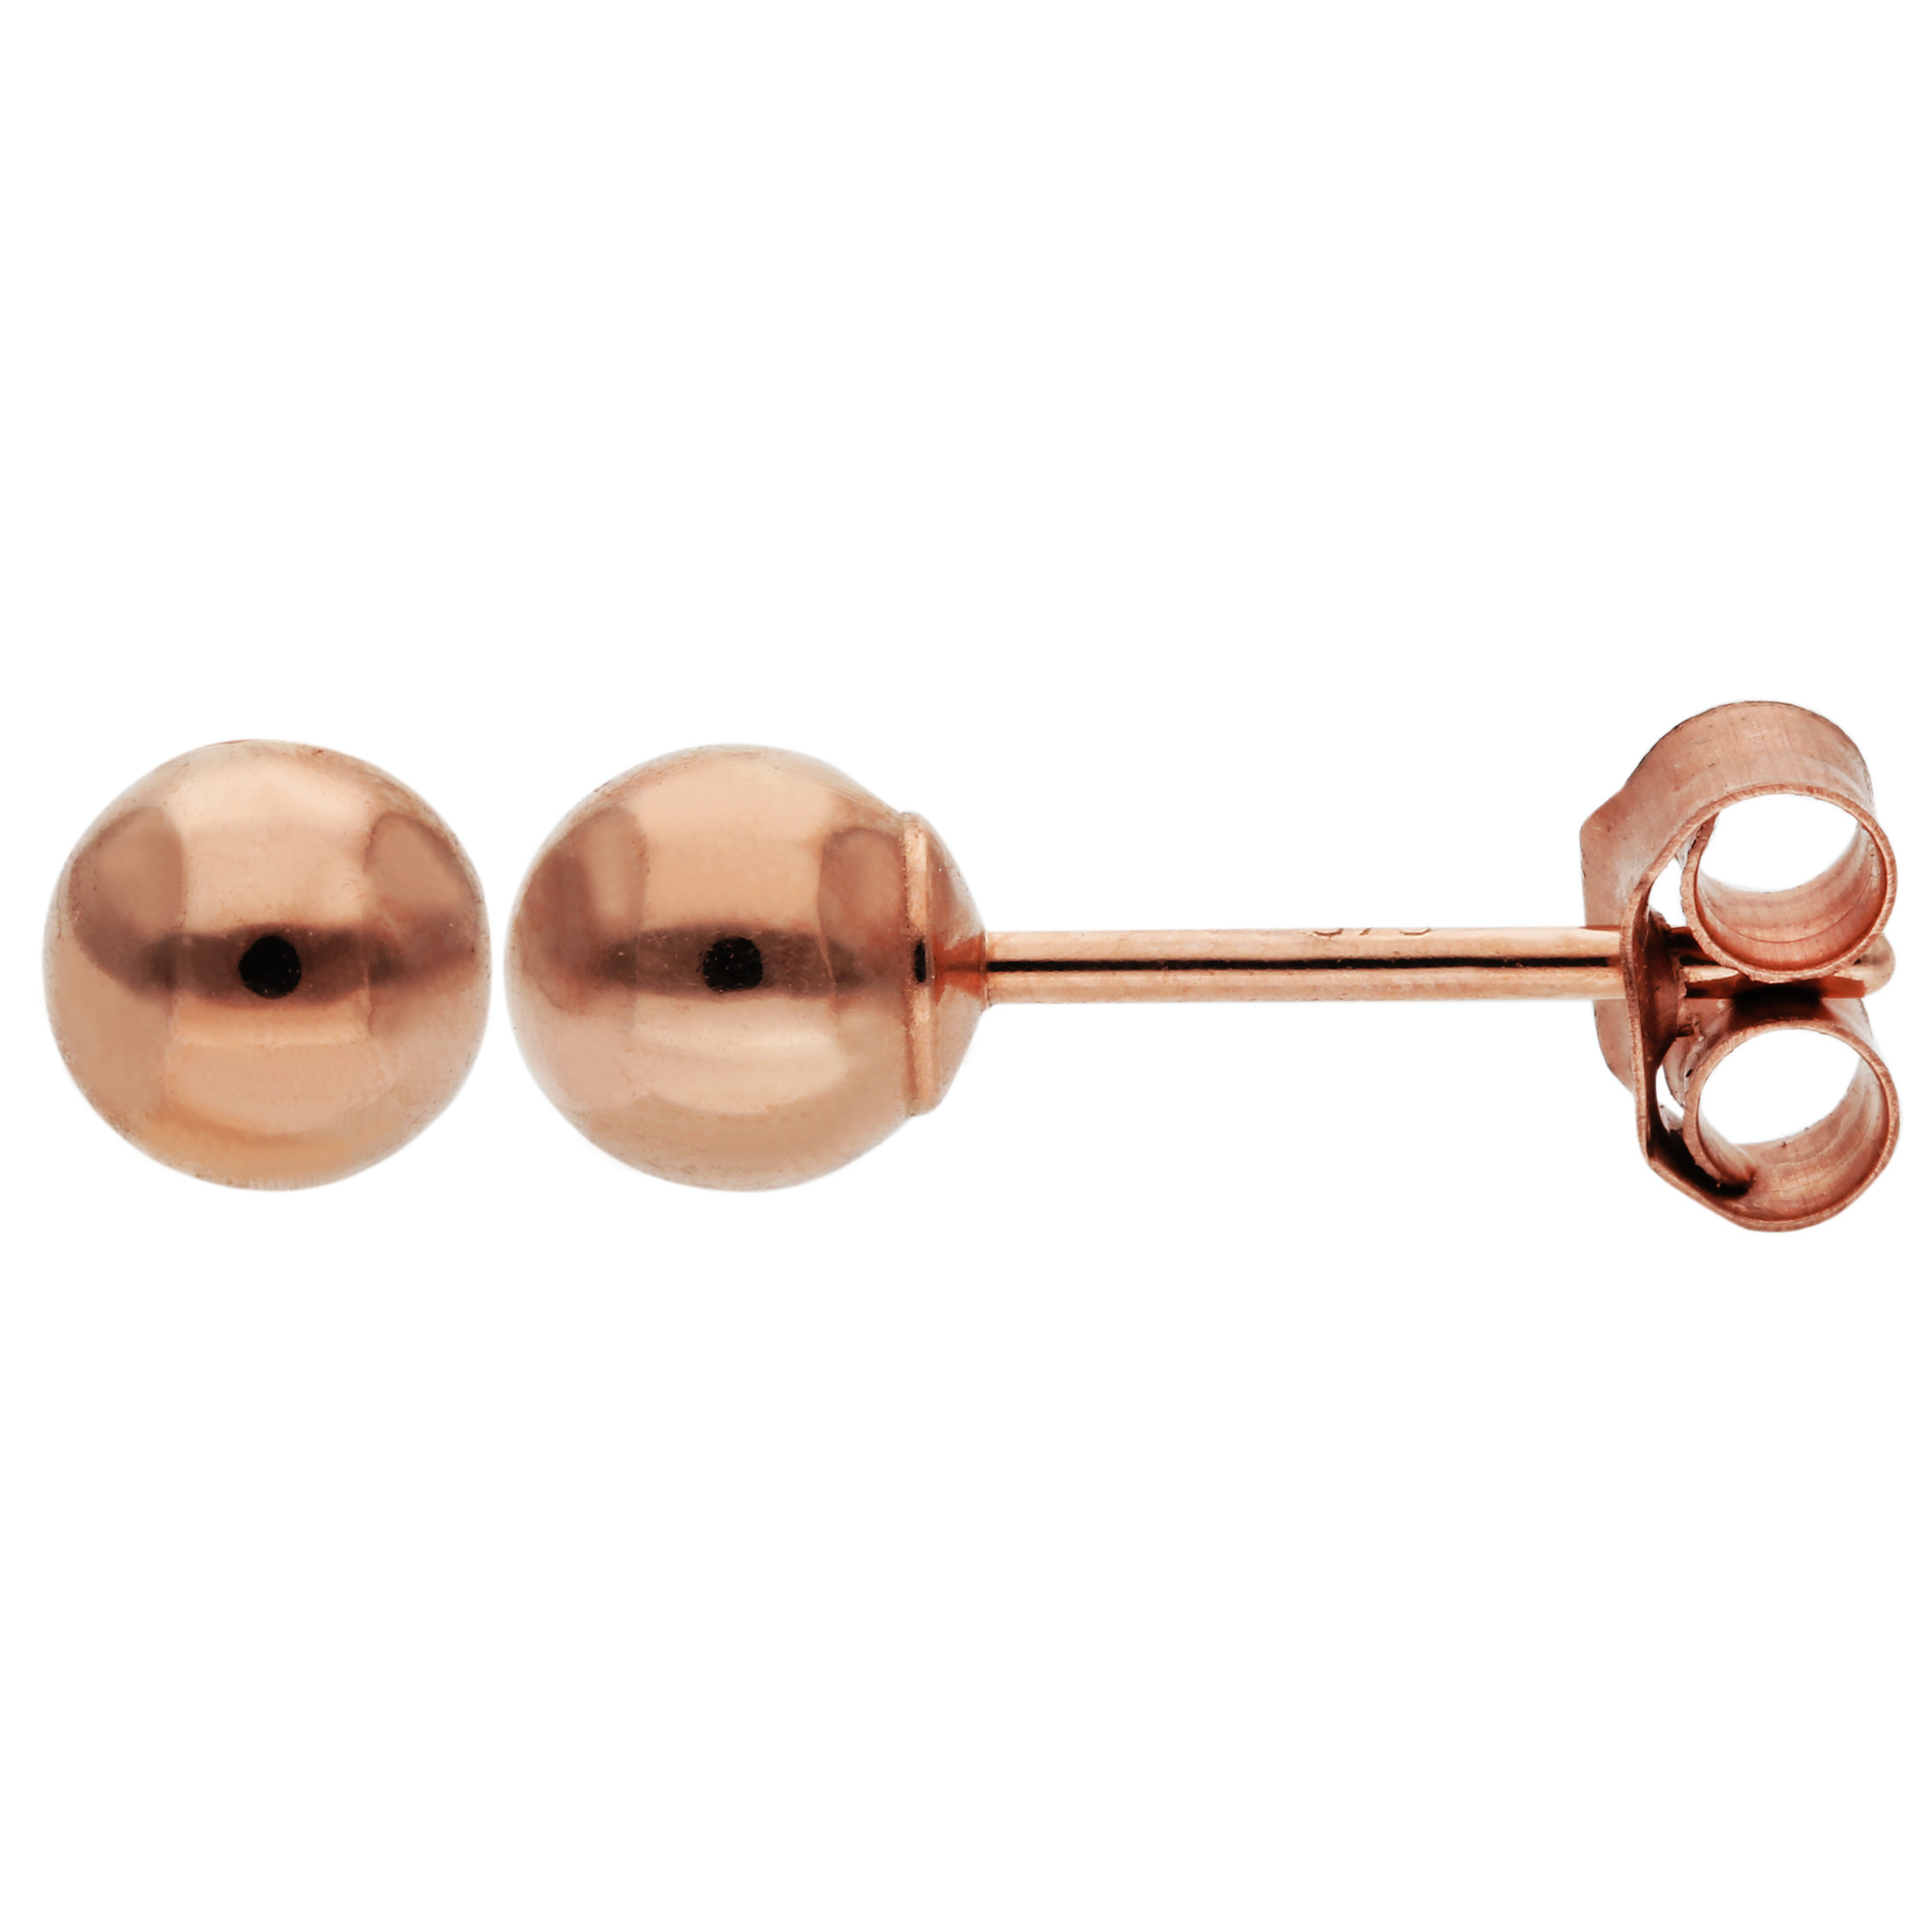 9ct rose gold 4mm ball stud sleeper earrings Gift box 